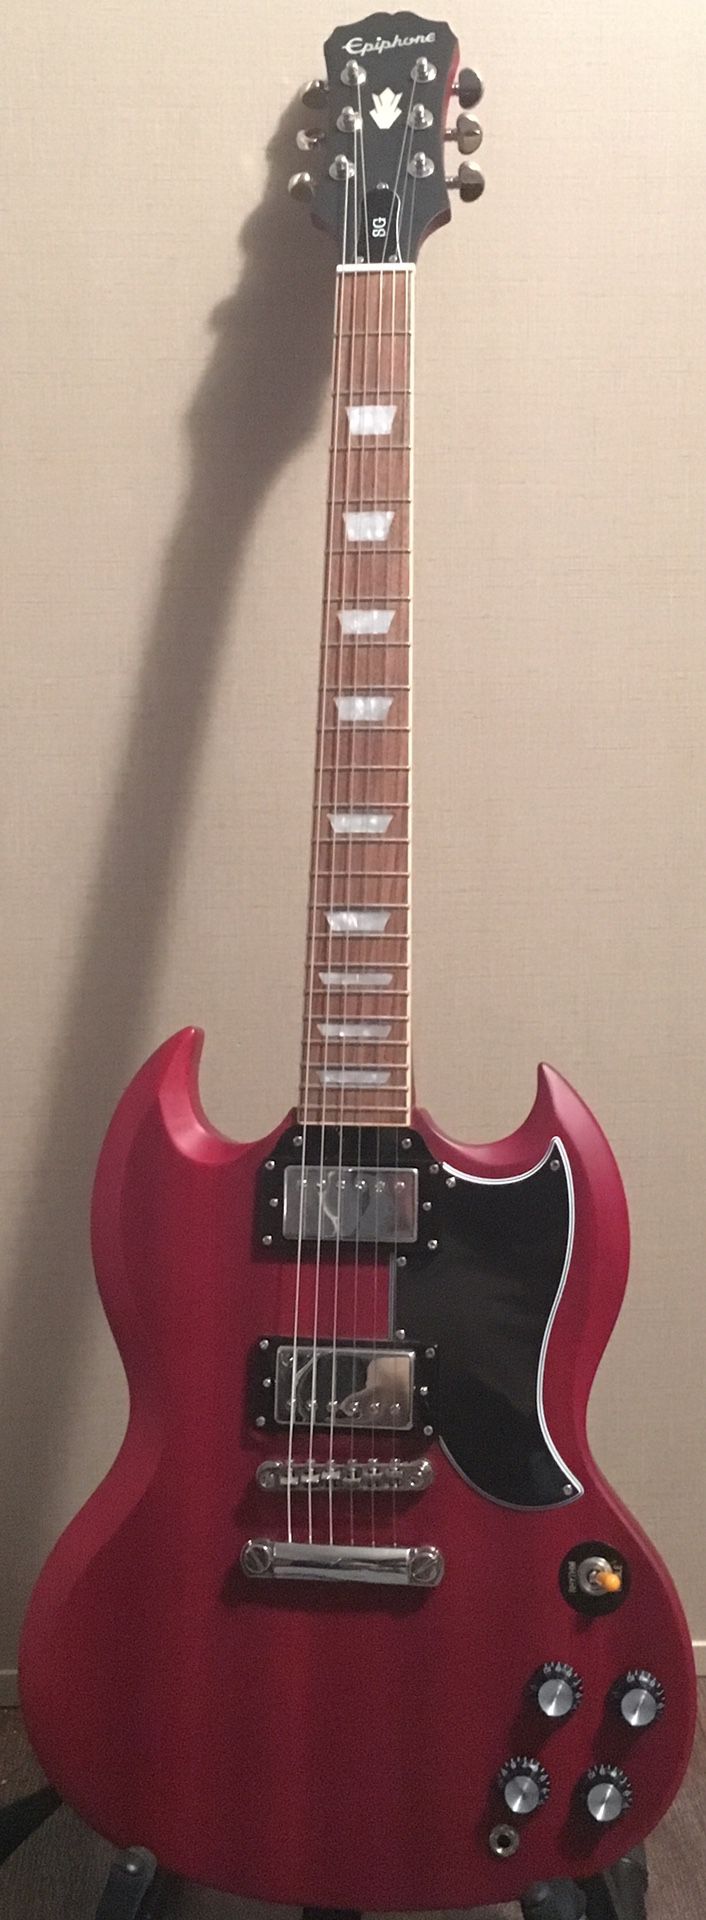 Epiphone Vintage G-400 Electric Guitar Worn Cherry